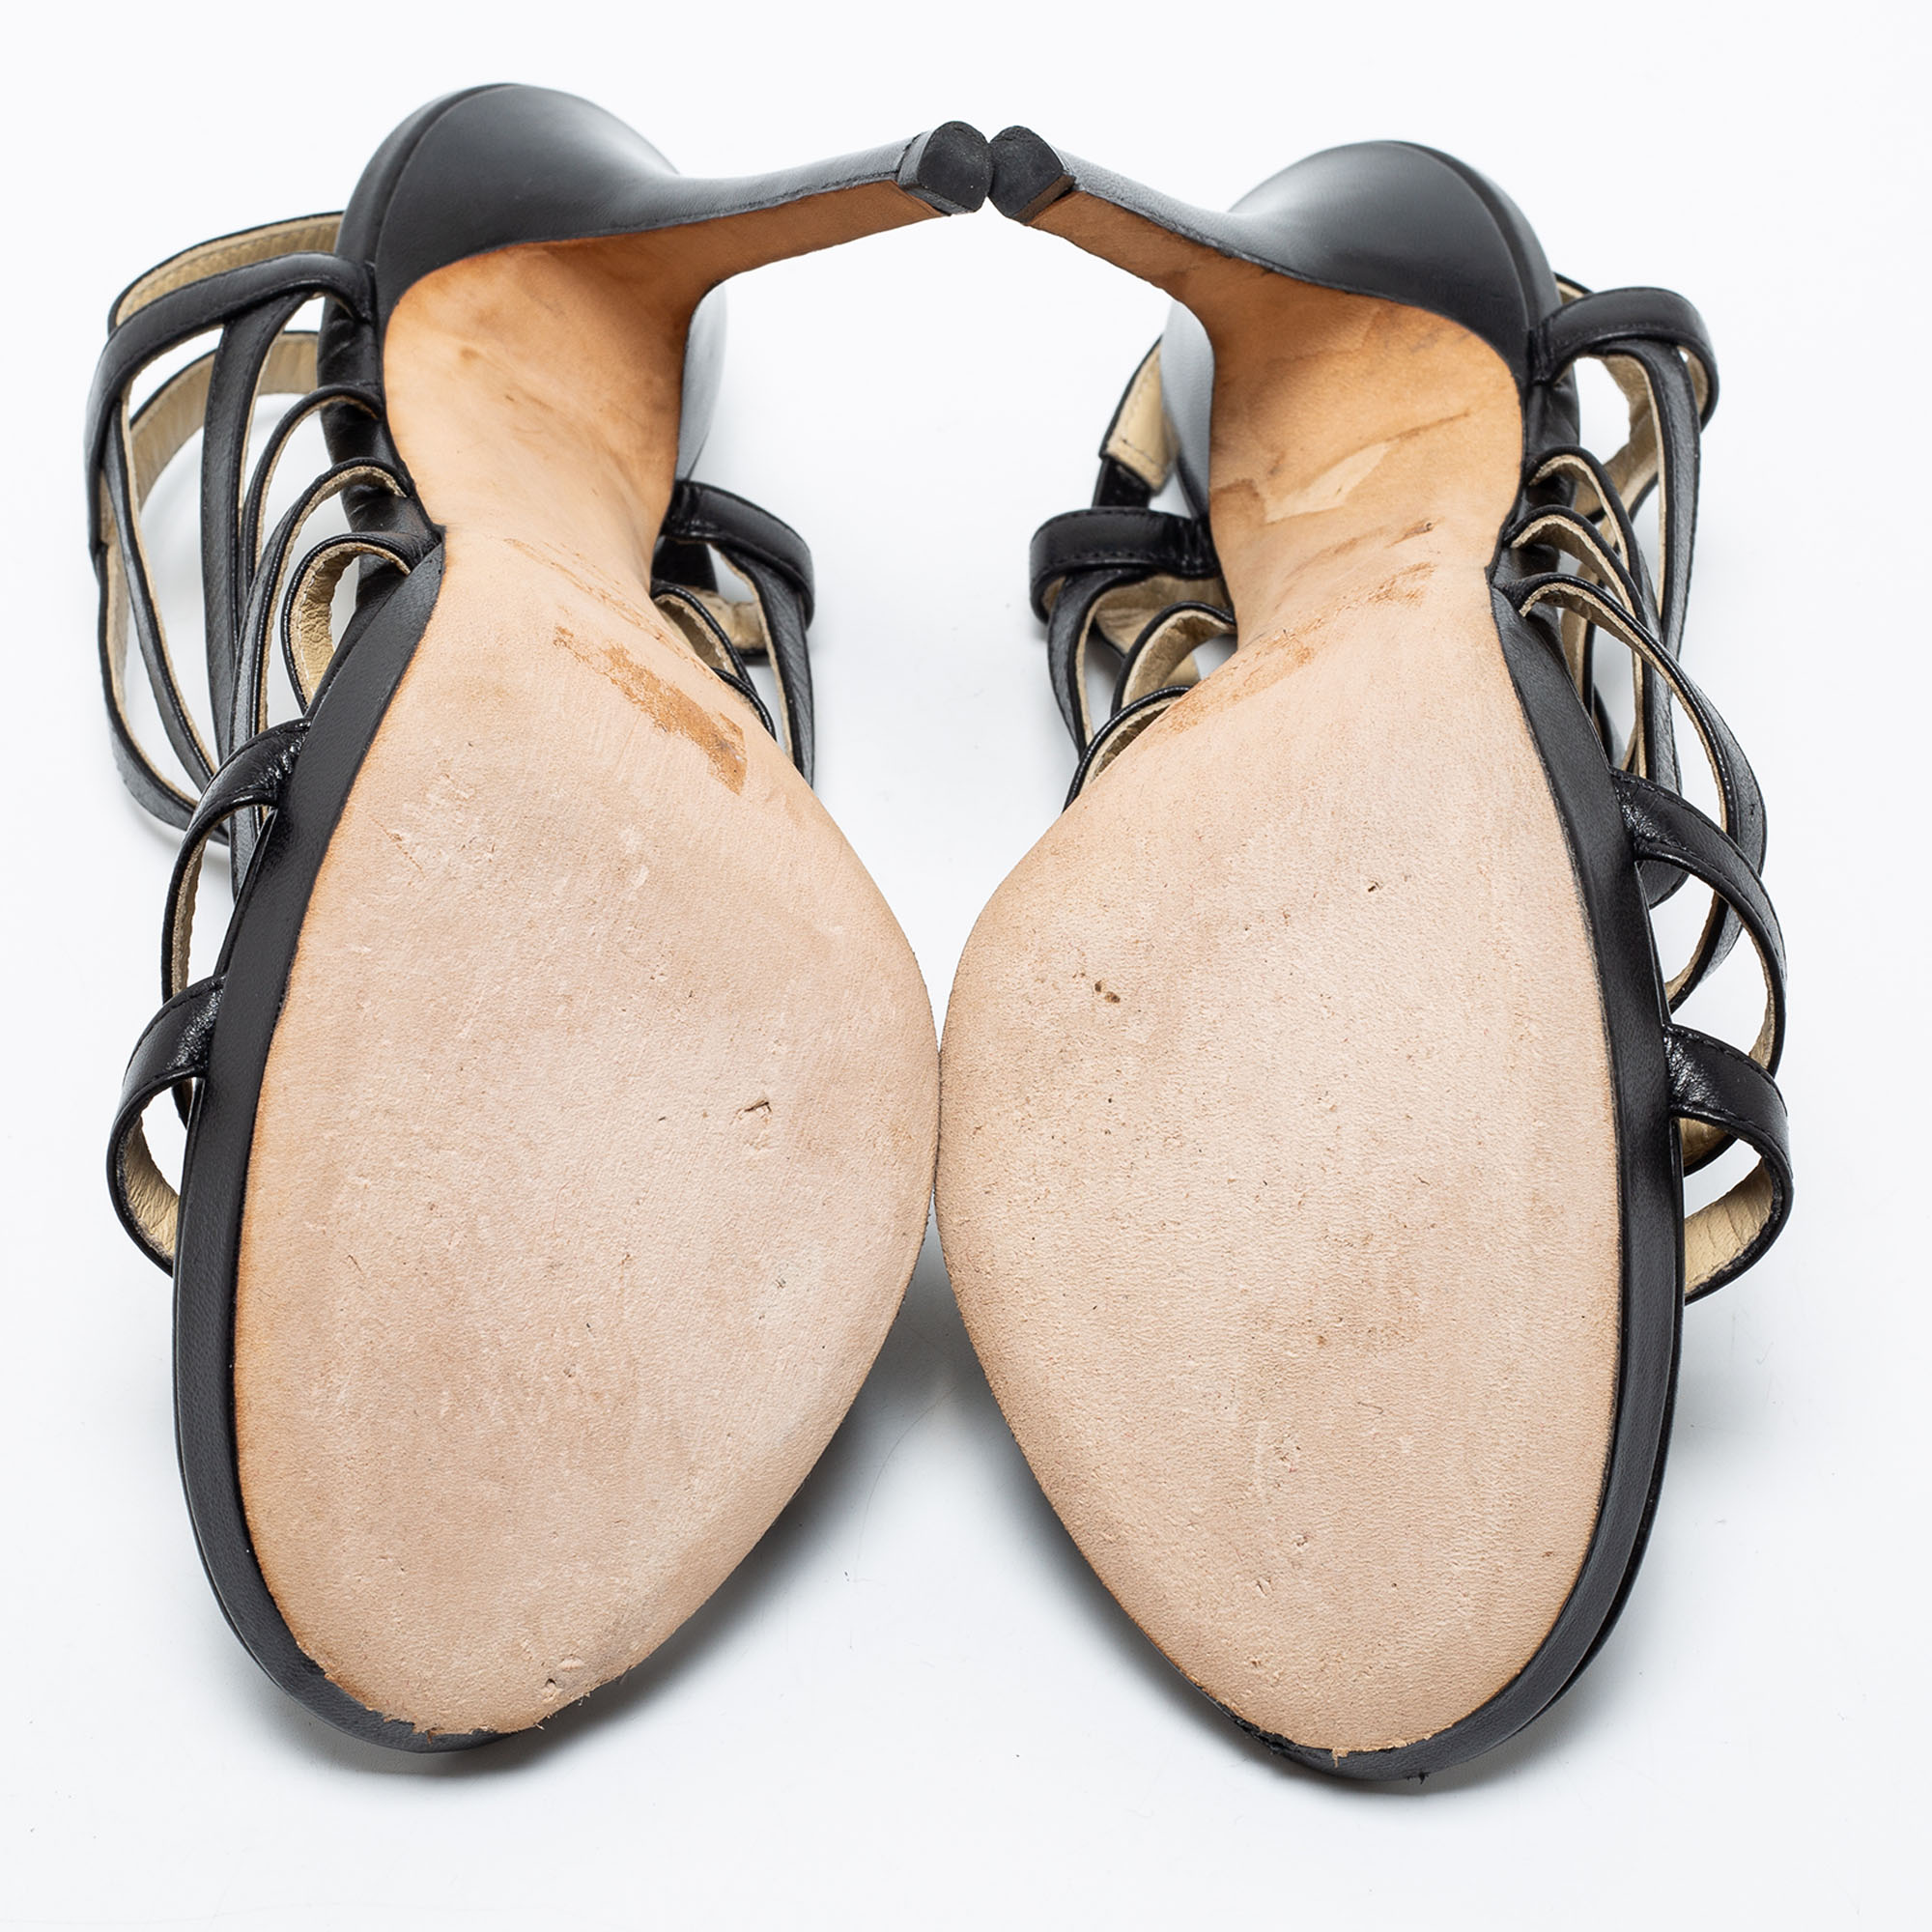 Jimmy Choo Black Leather Glenys Gladiator Platform Sandals Size 39.5